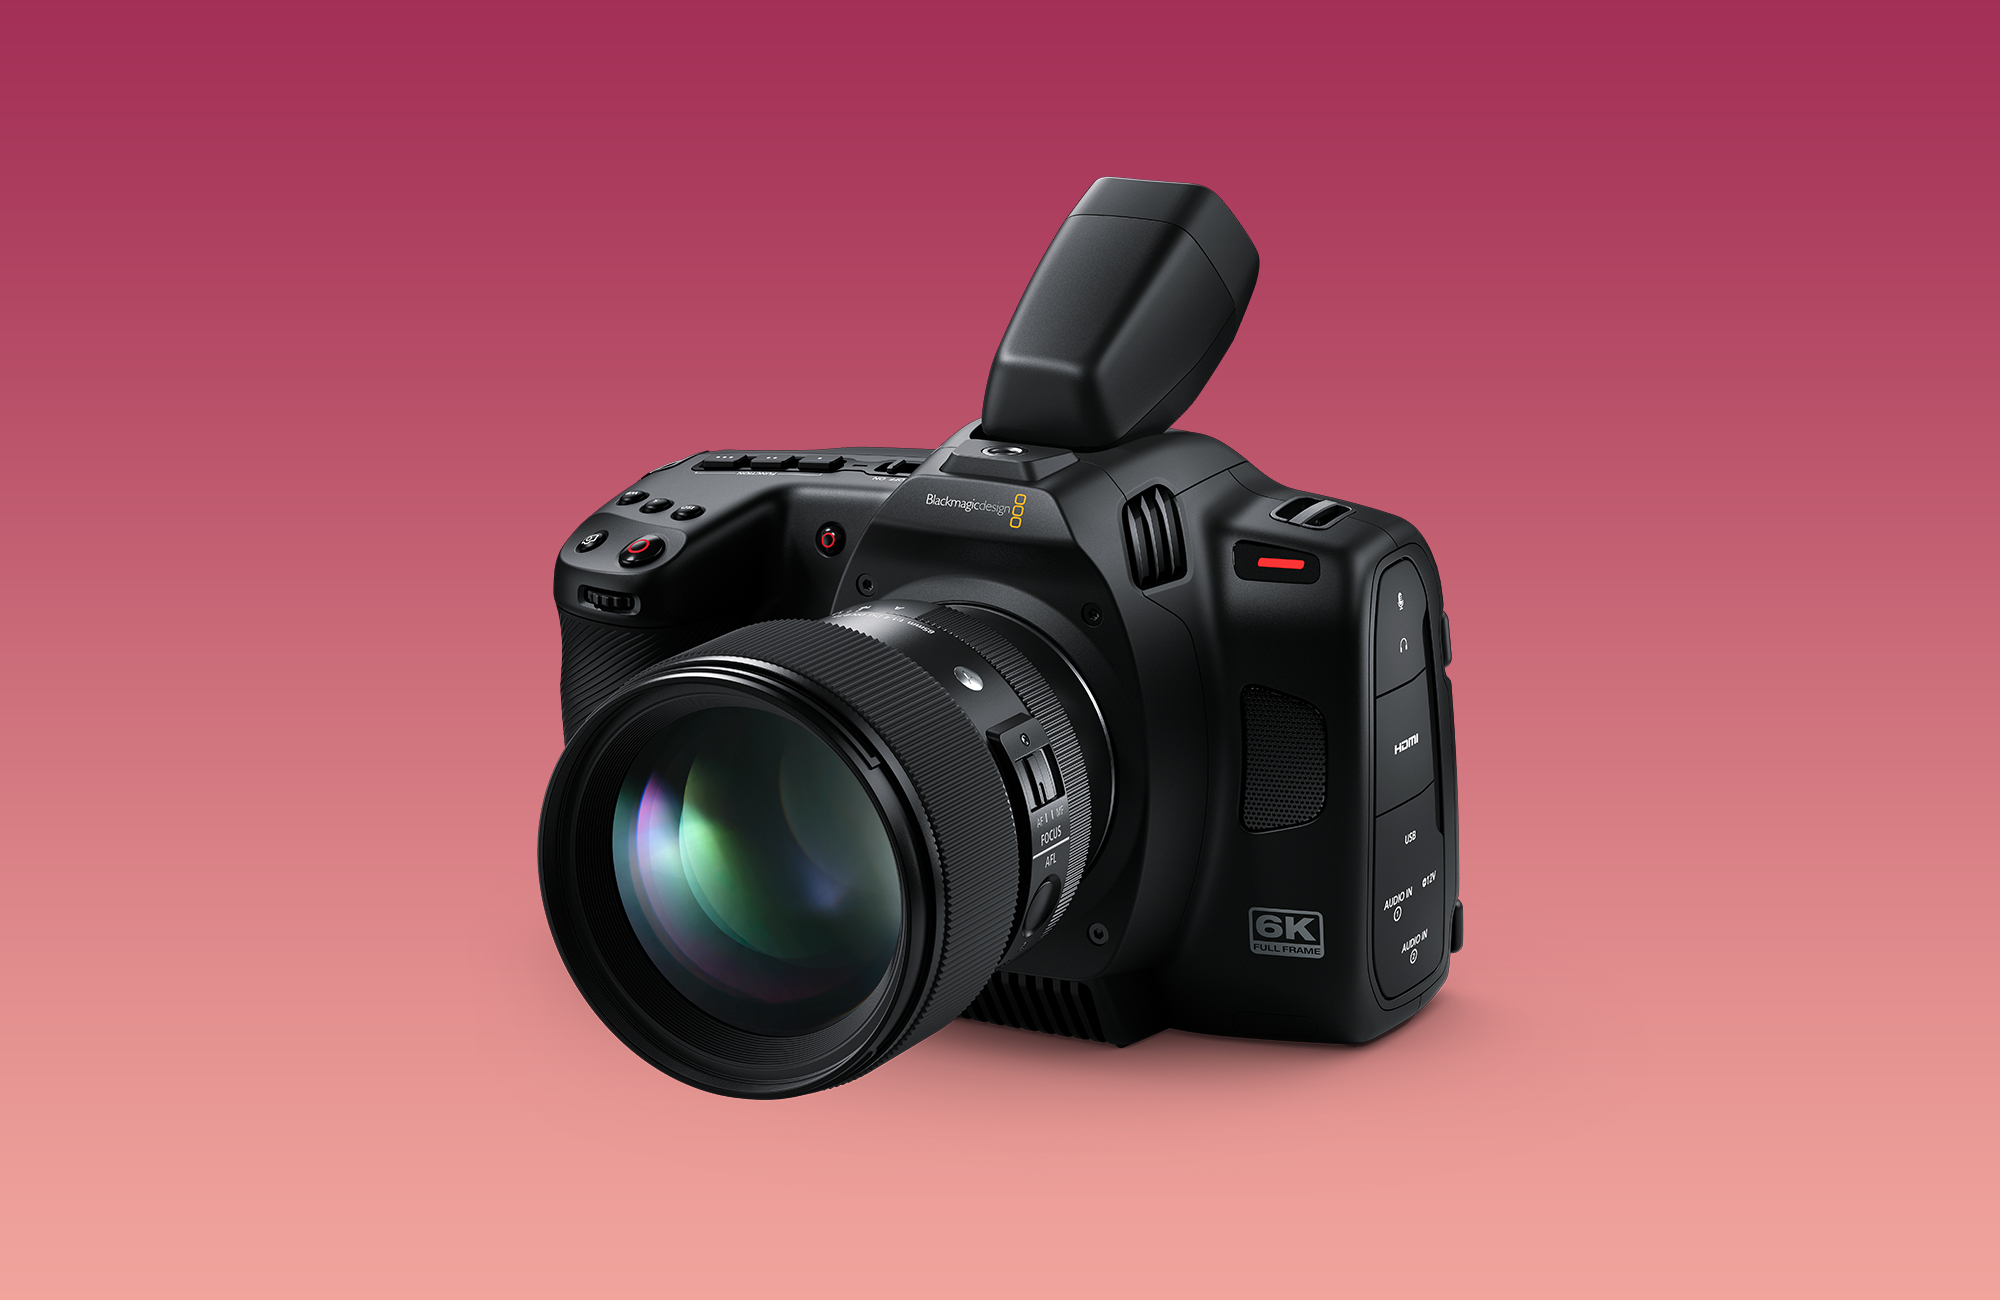 The Blackmagic Cinema Camera 6K is the company’s first full-frame camera